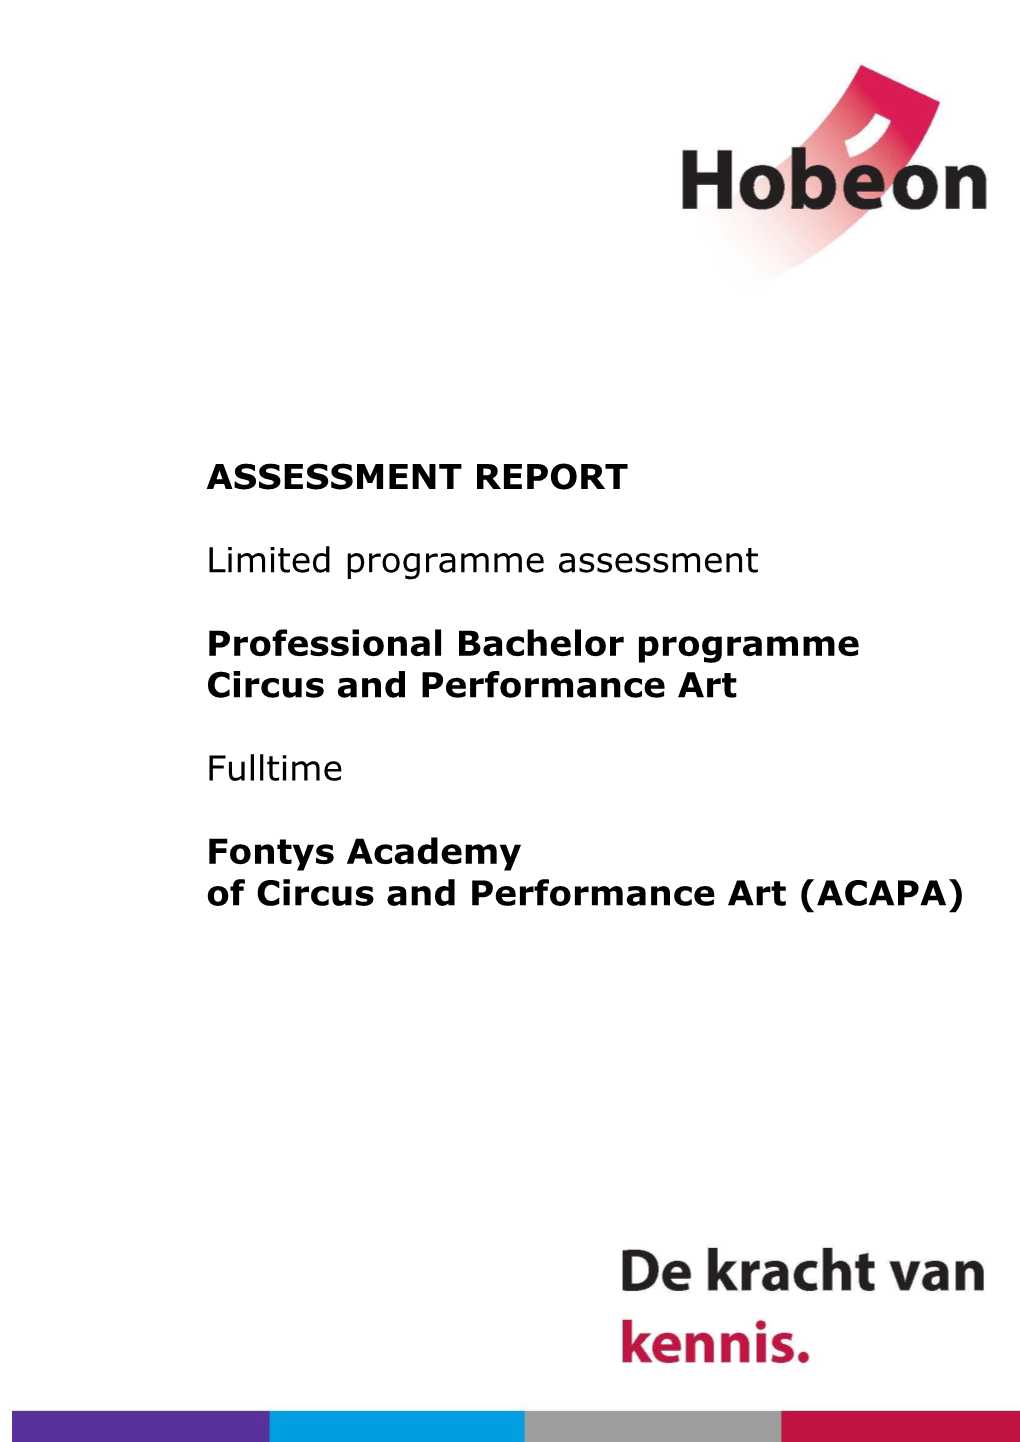 ASSESSMENT REPORT Limited Programme Assessment